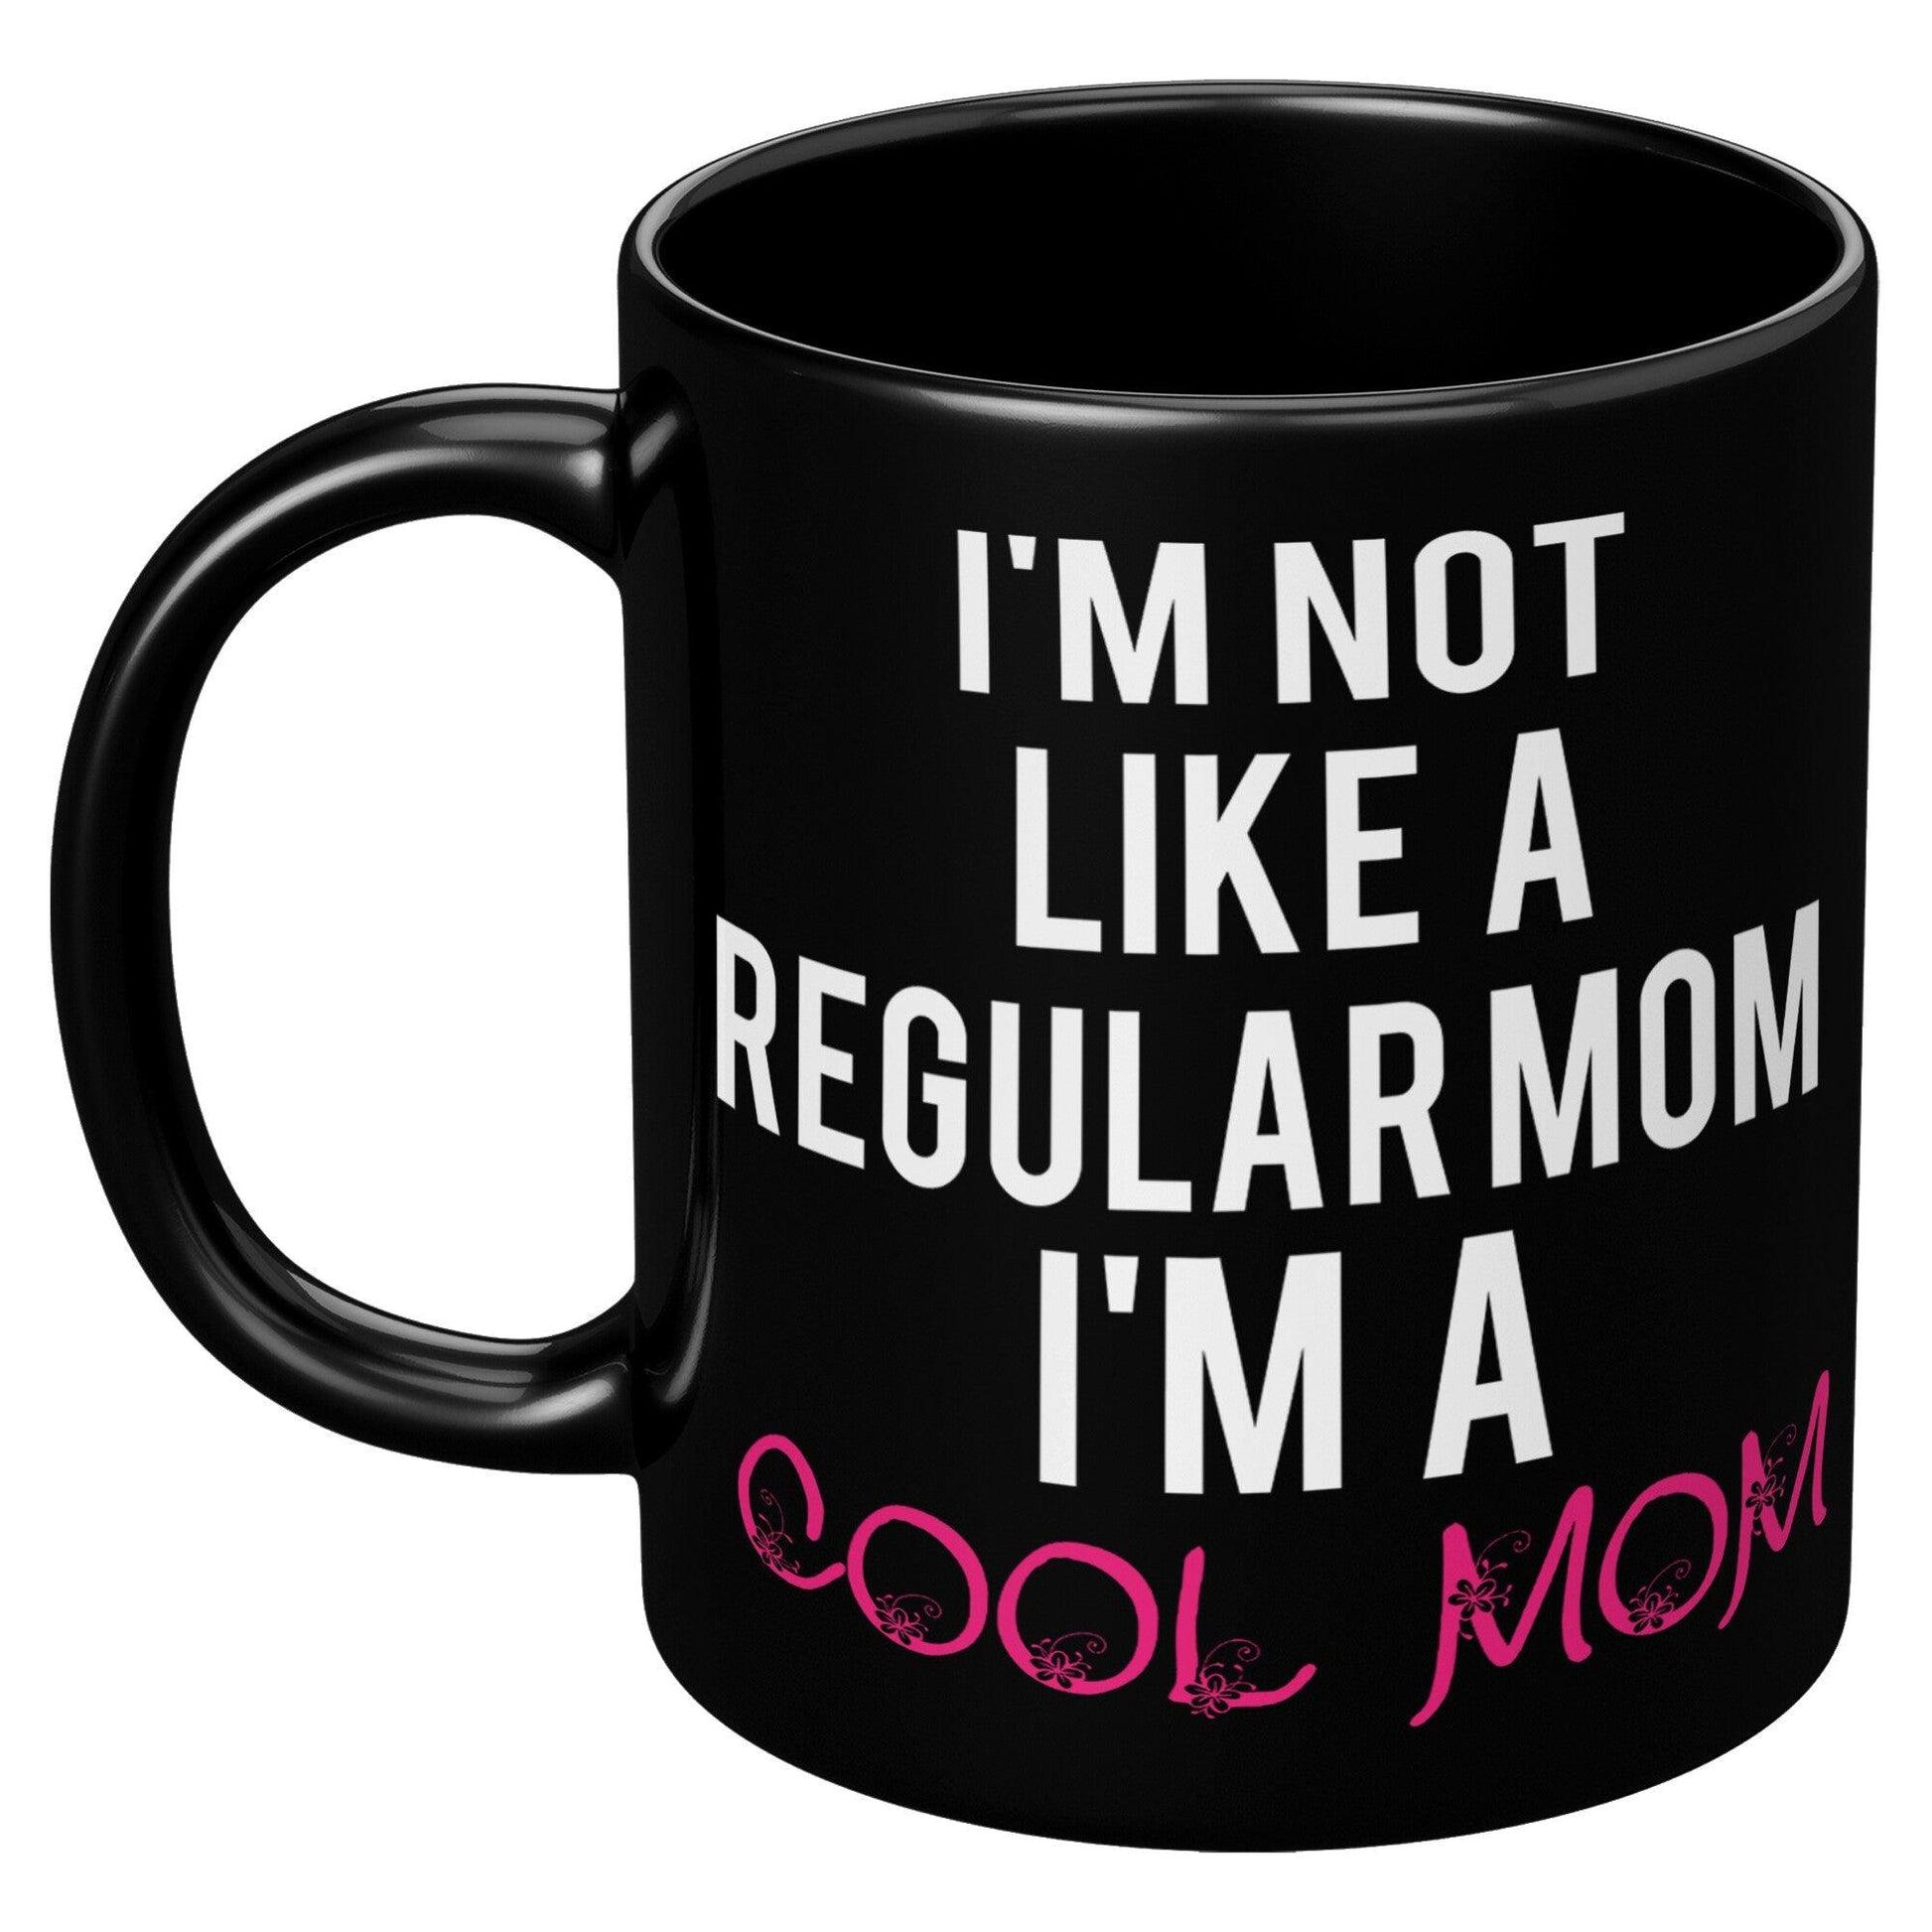 I'm Not Like A Regular Mom I'm A Cool Mom Black Mug - TheGivenGet